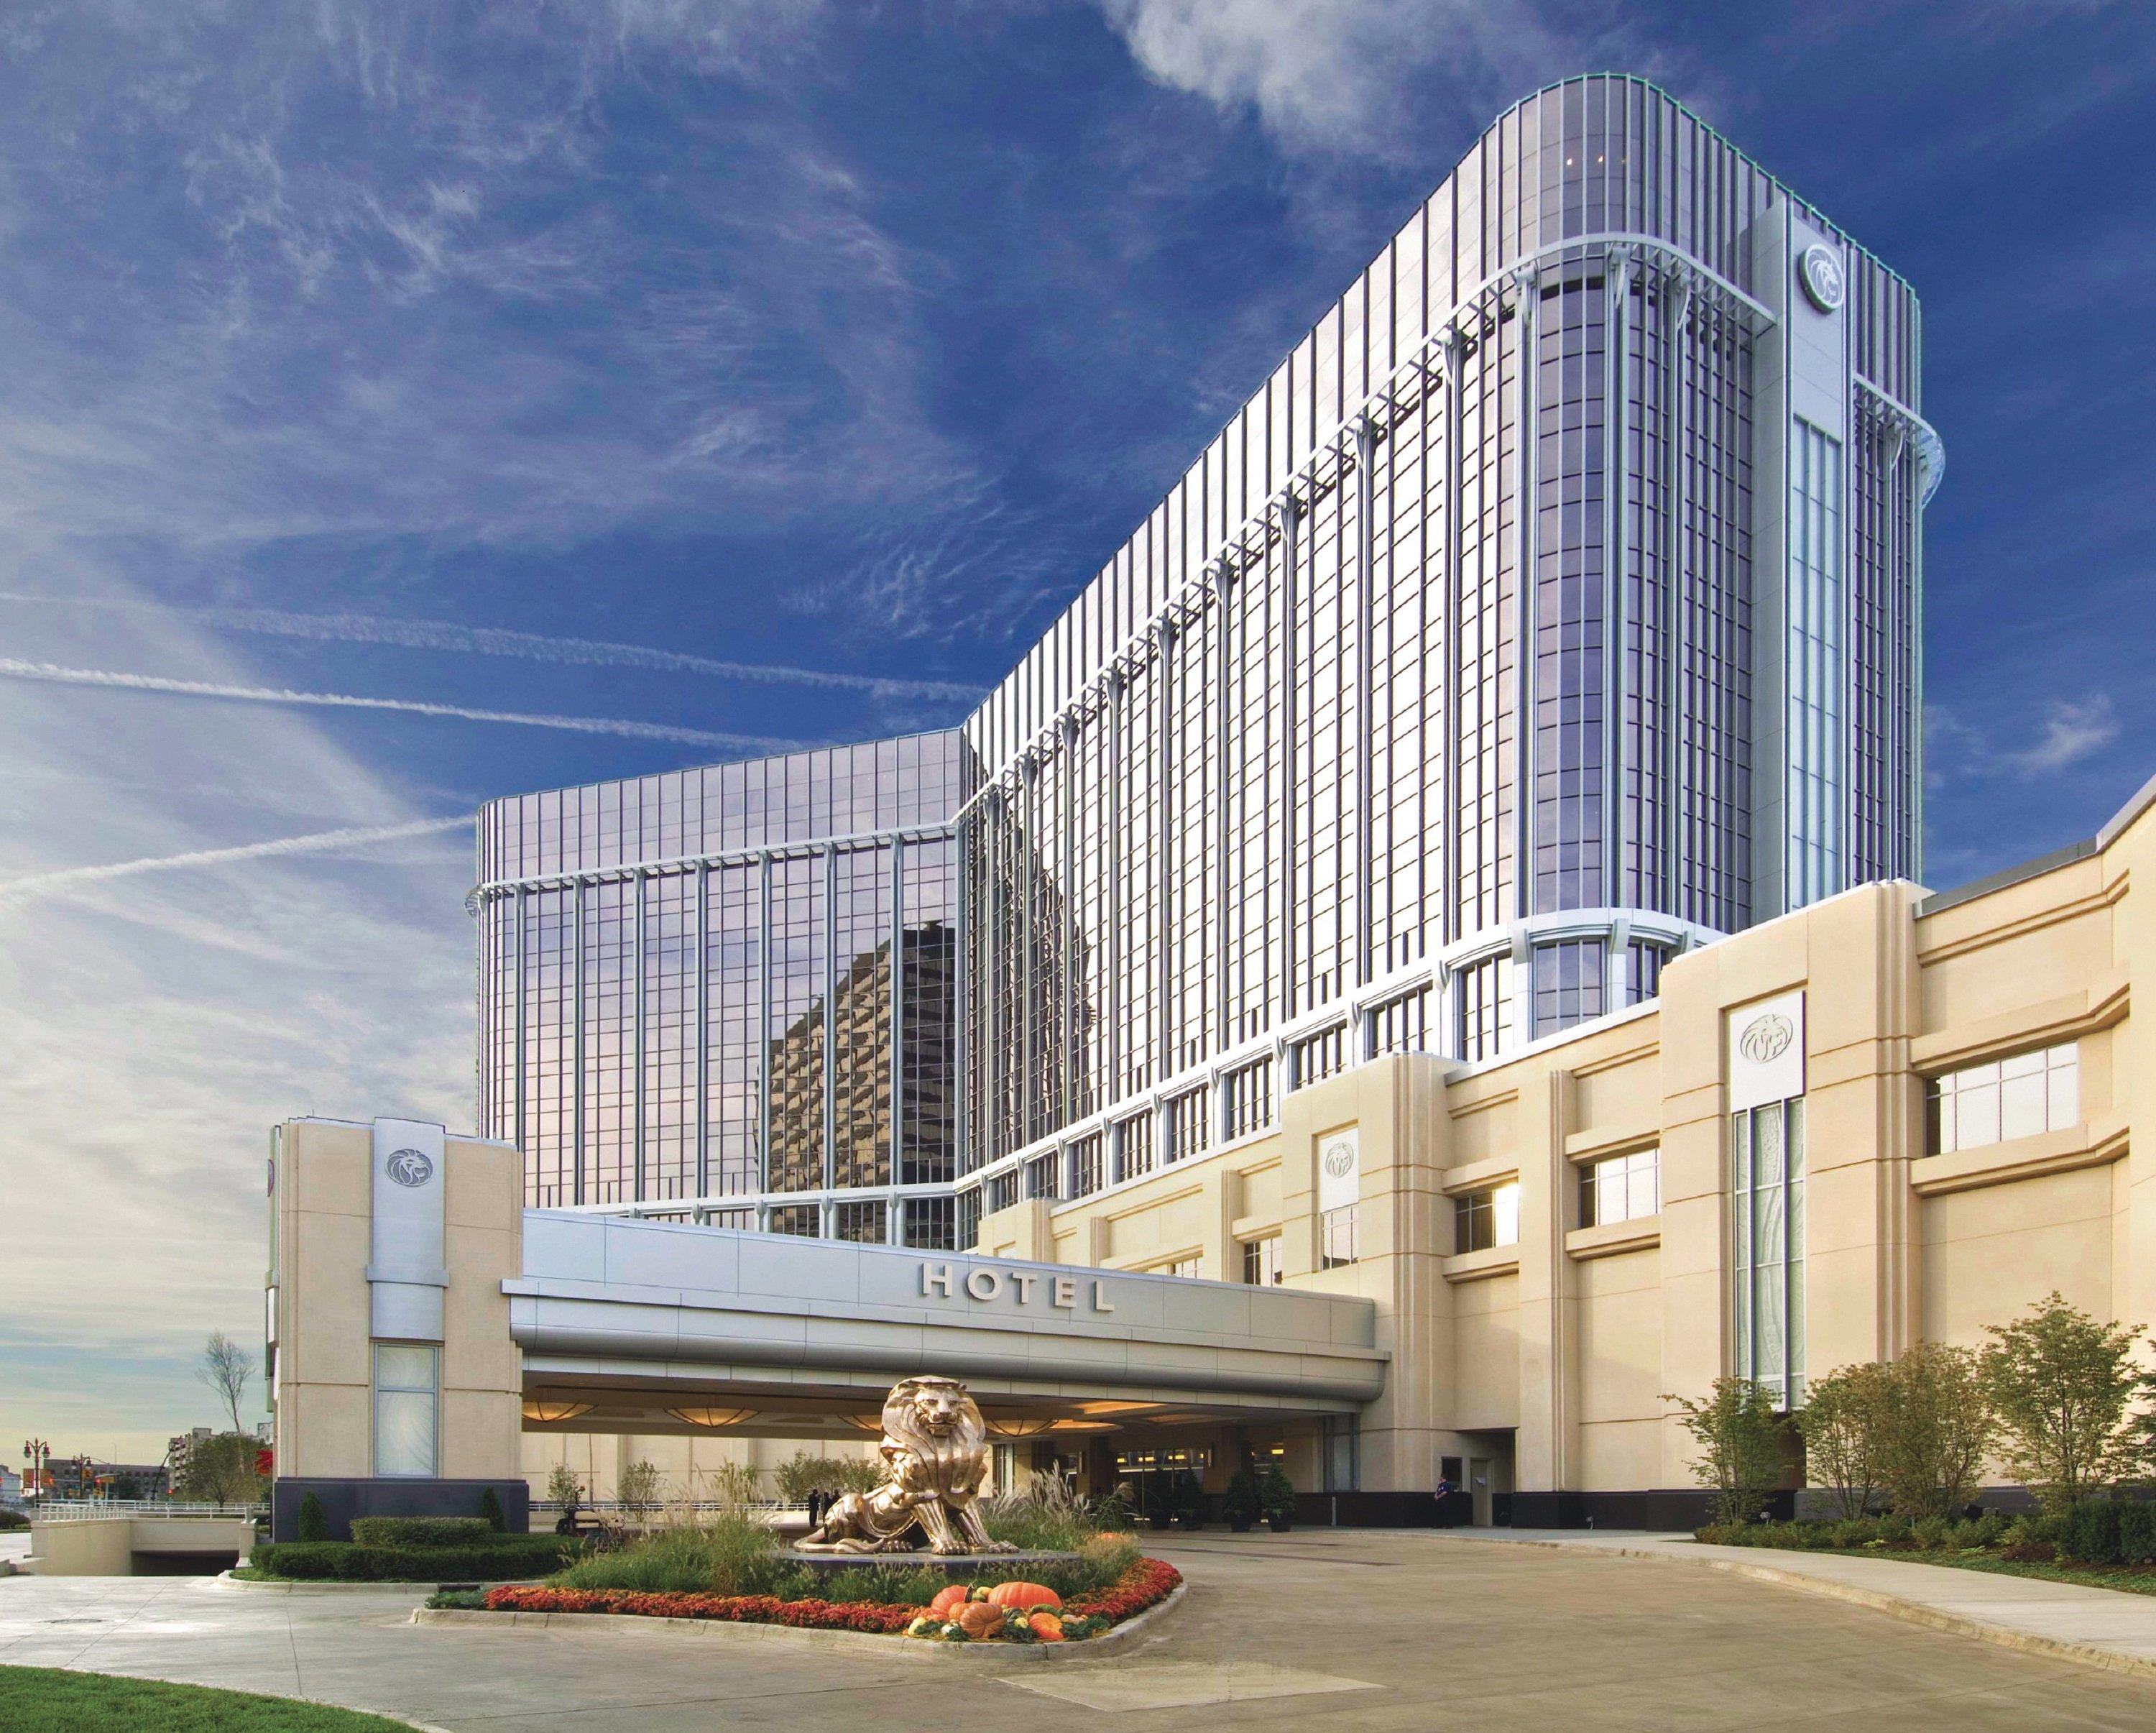 detroit hotels near mgm casino